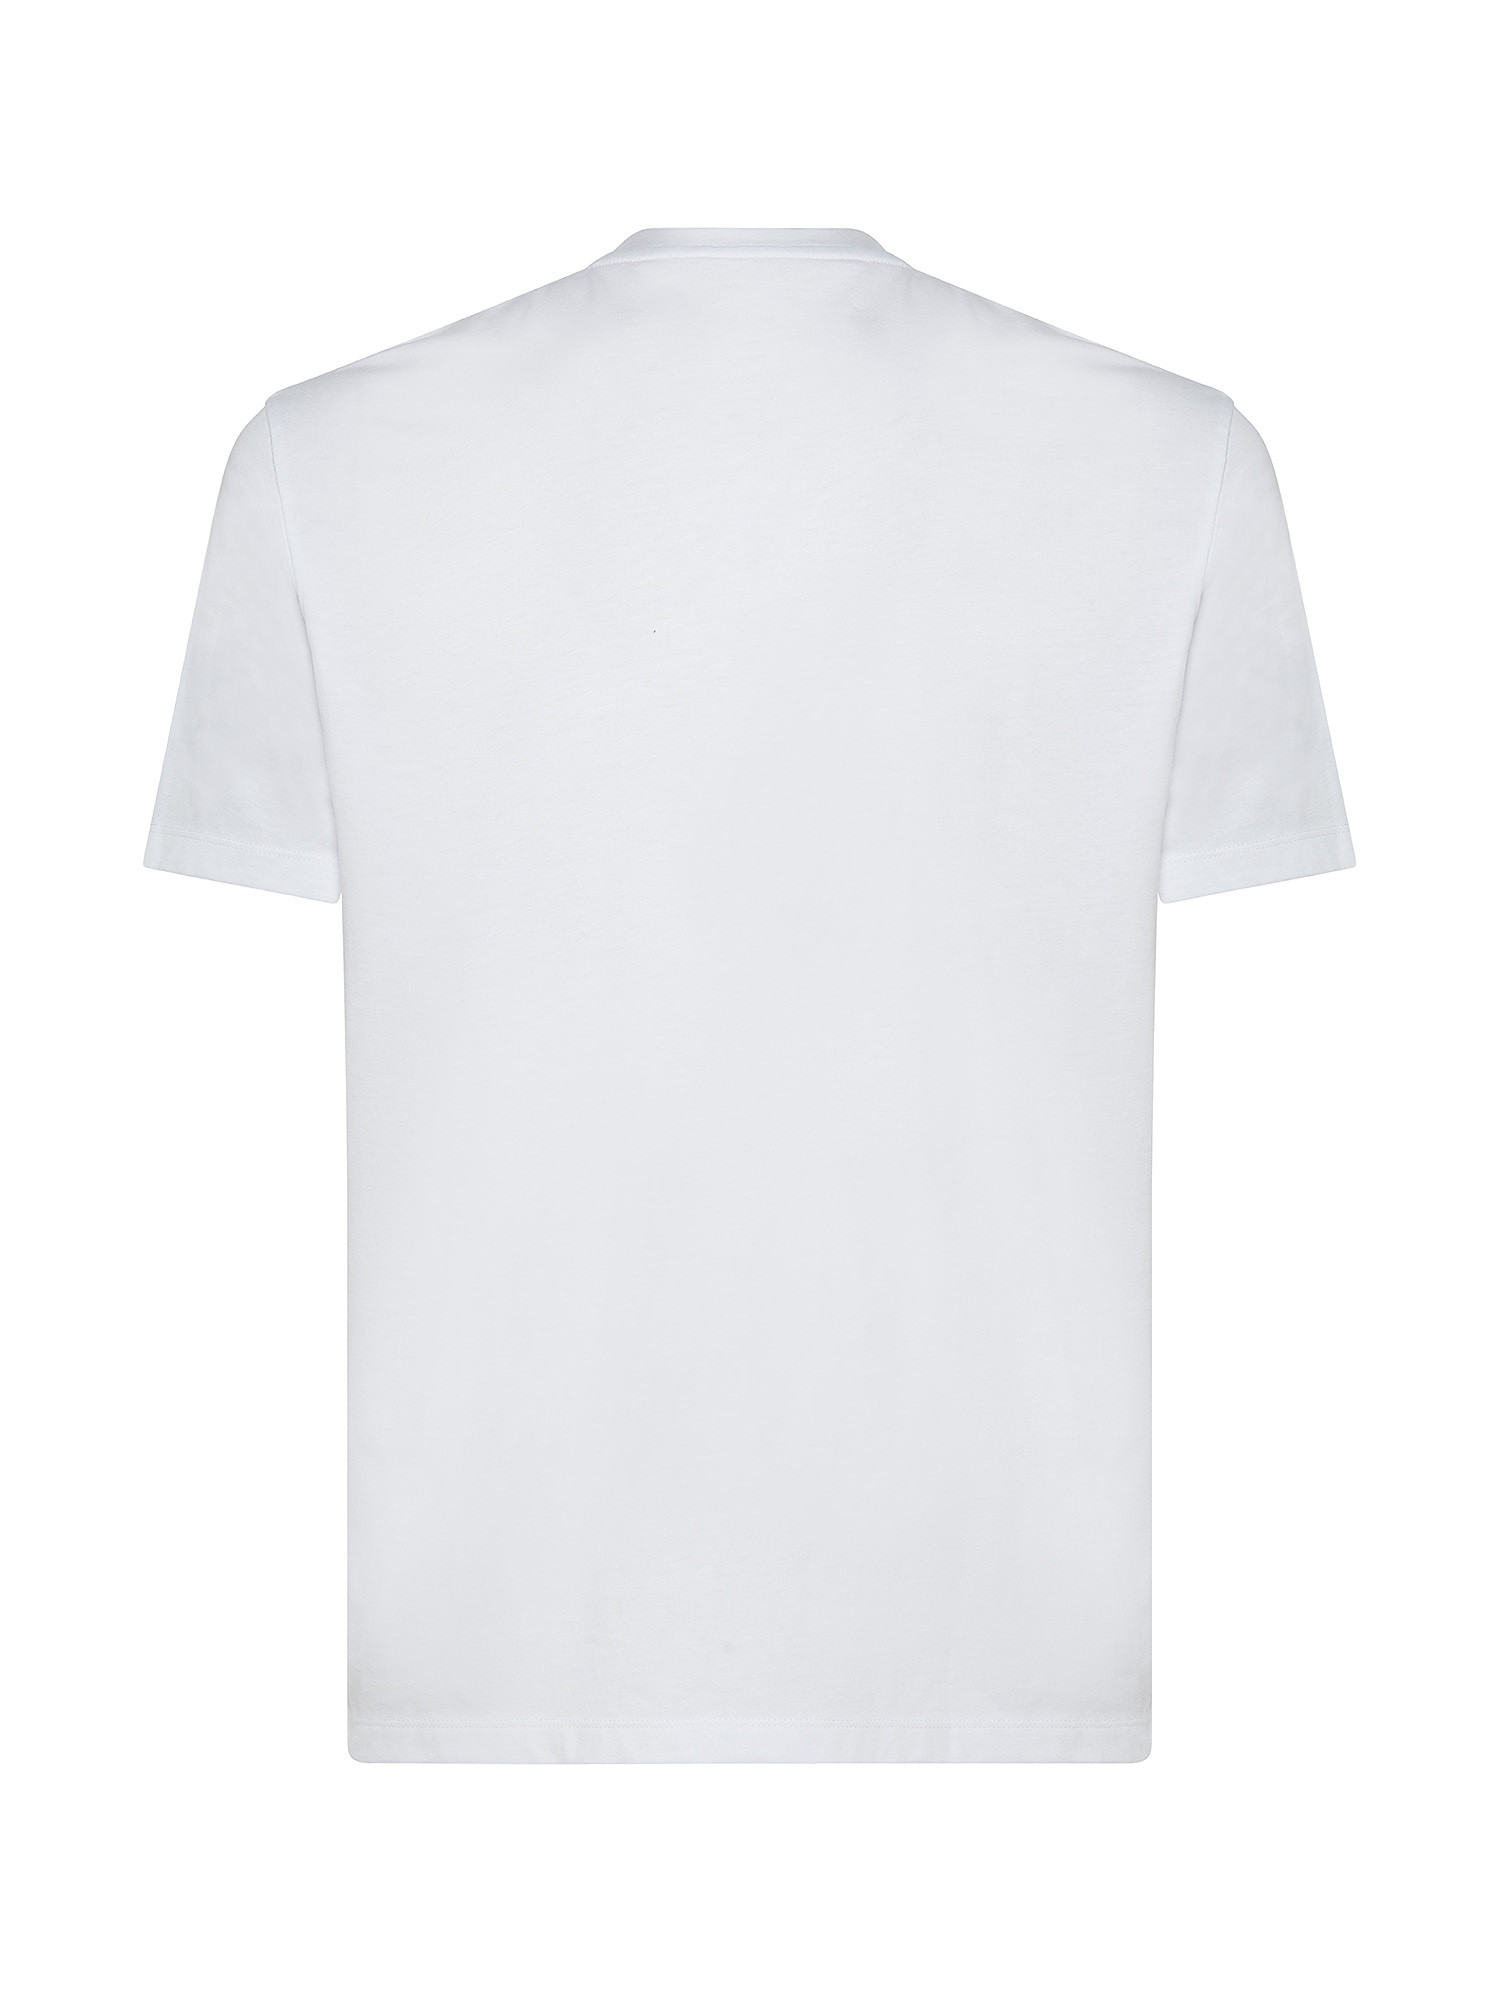 Armani Exchange - Regular fit T-shirt in organic cotton with logo, White, large image number 1